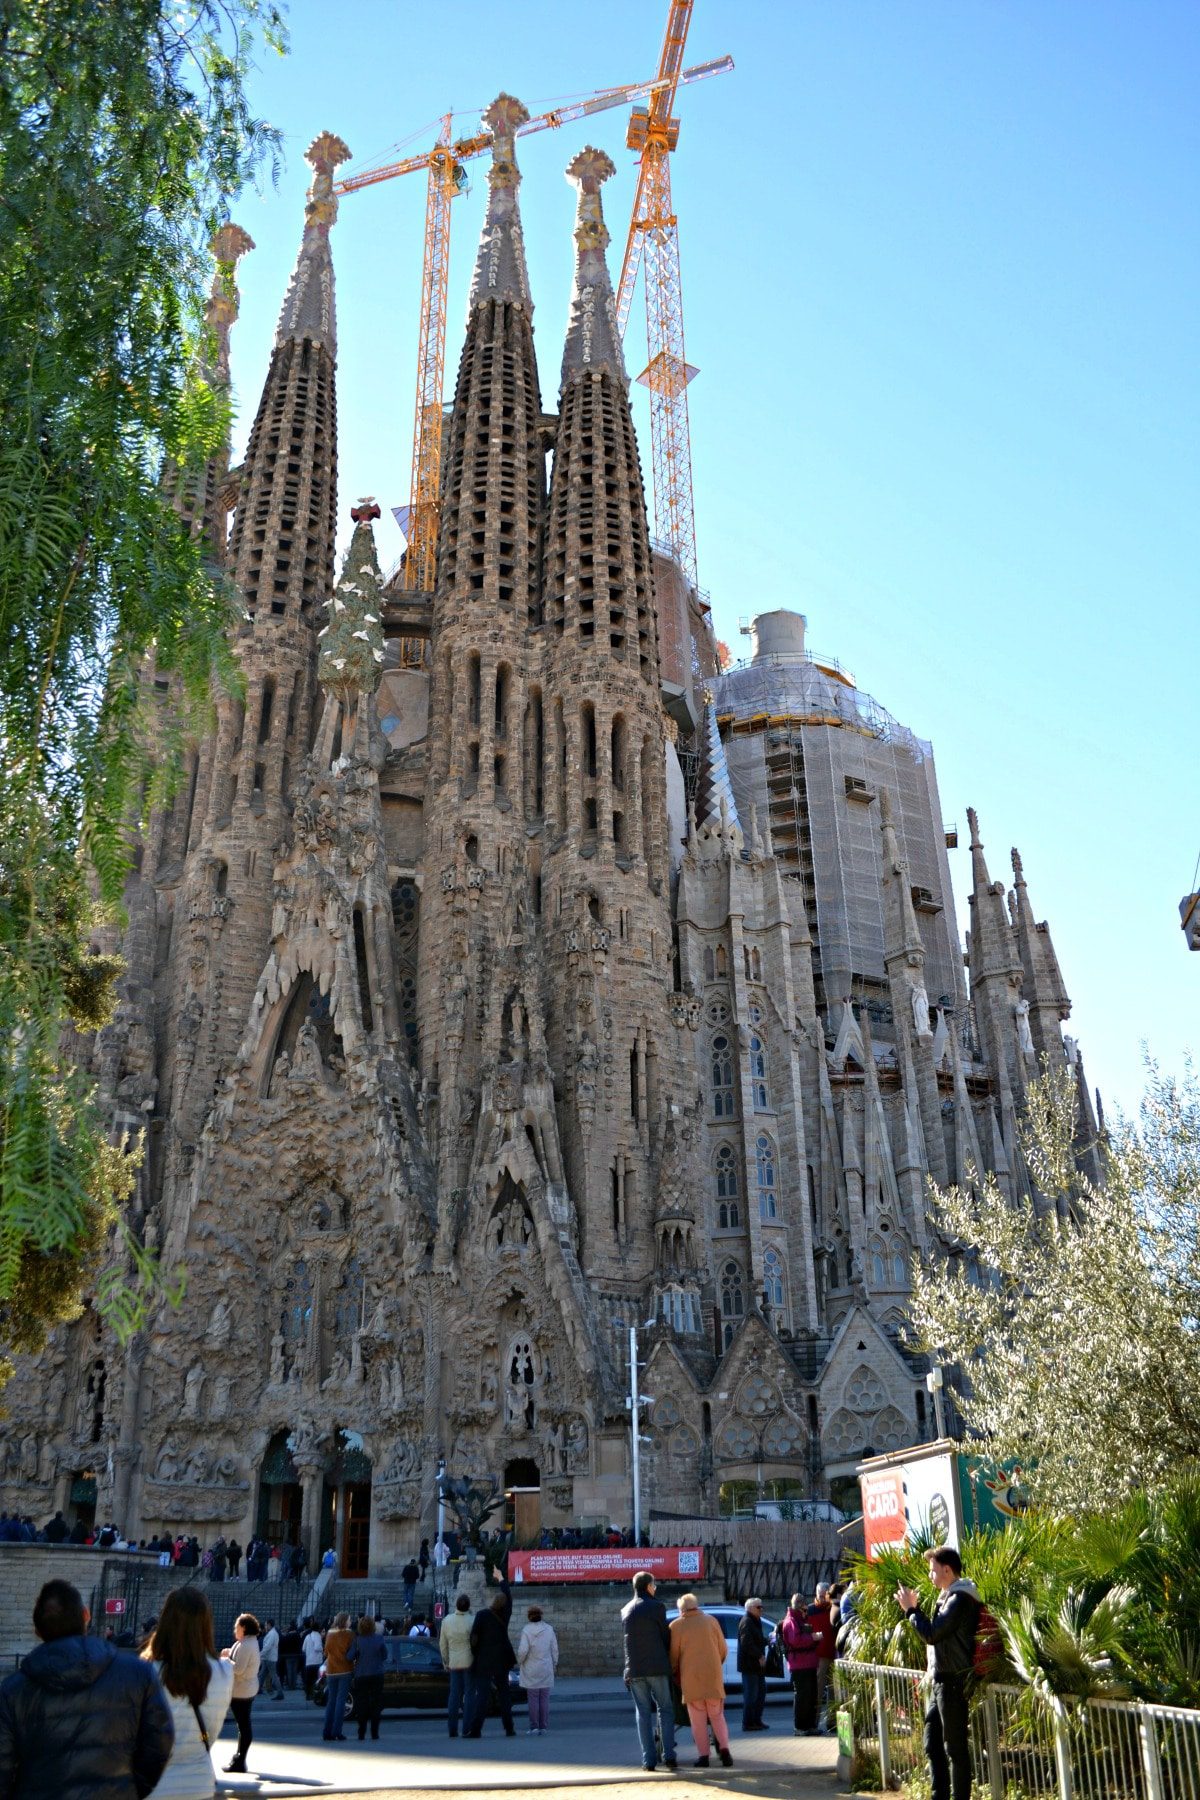 Work continues on Gaudi's La Sagrada Familia